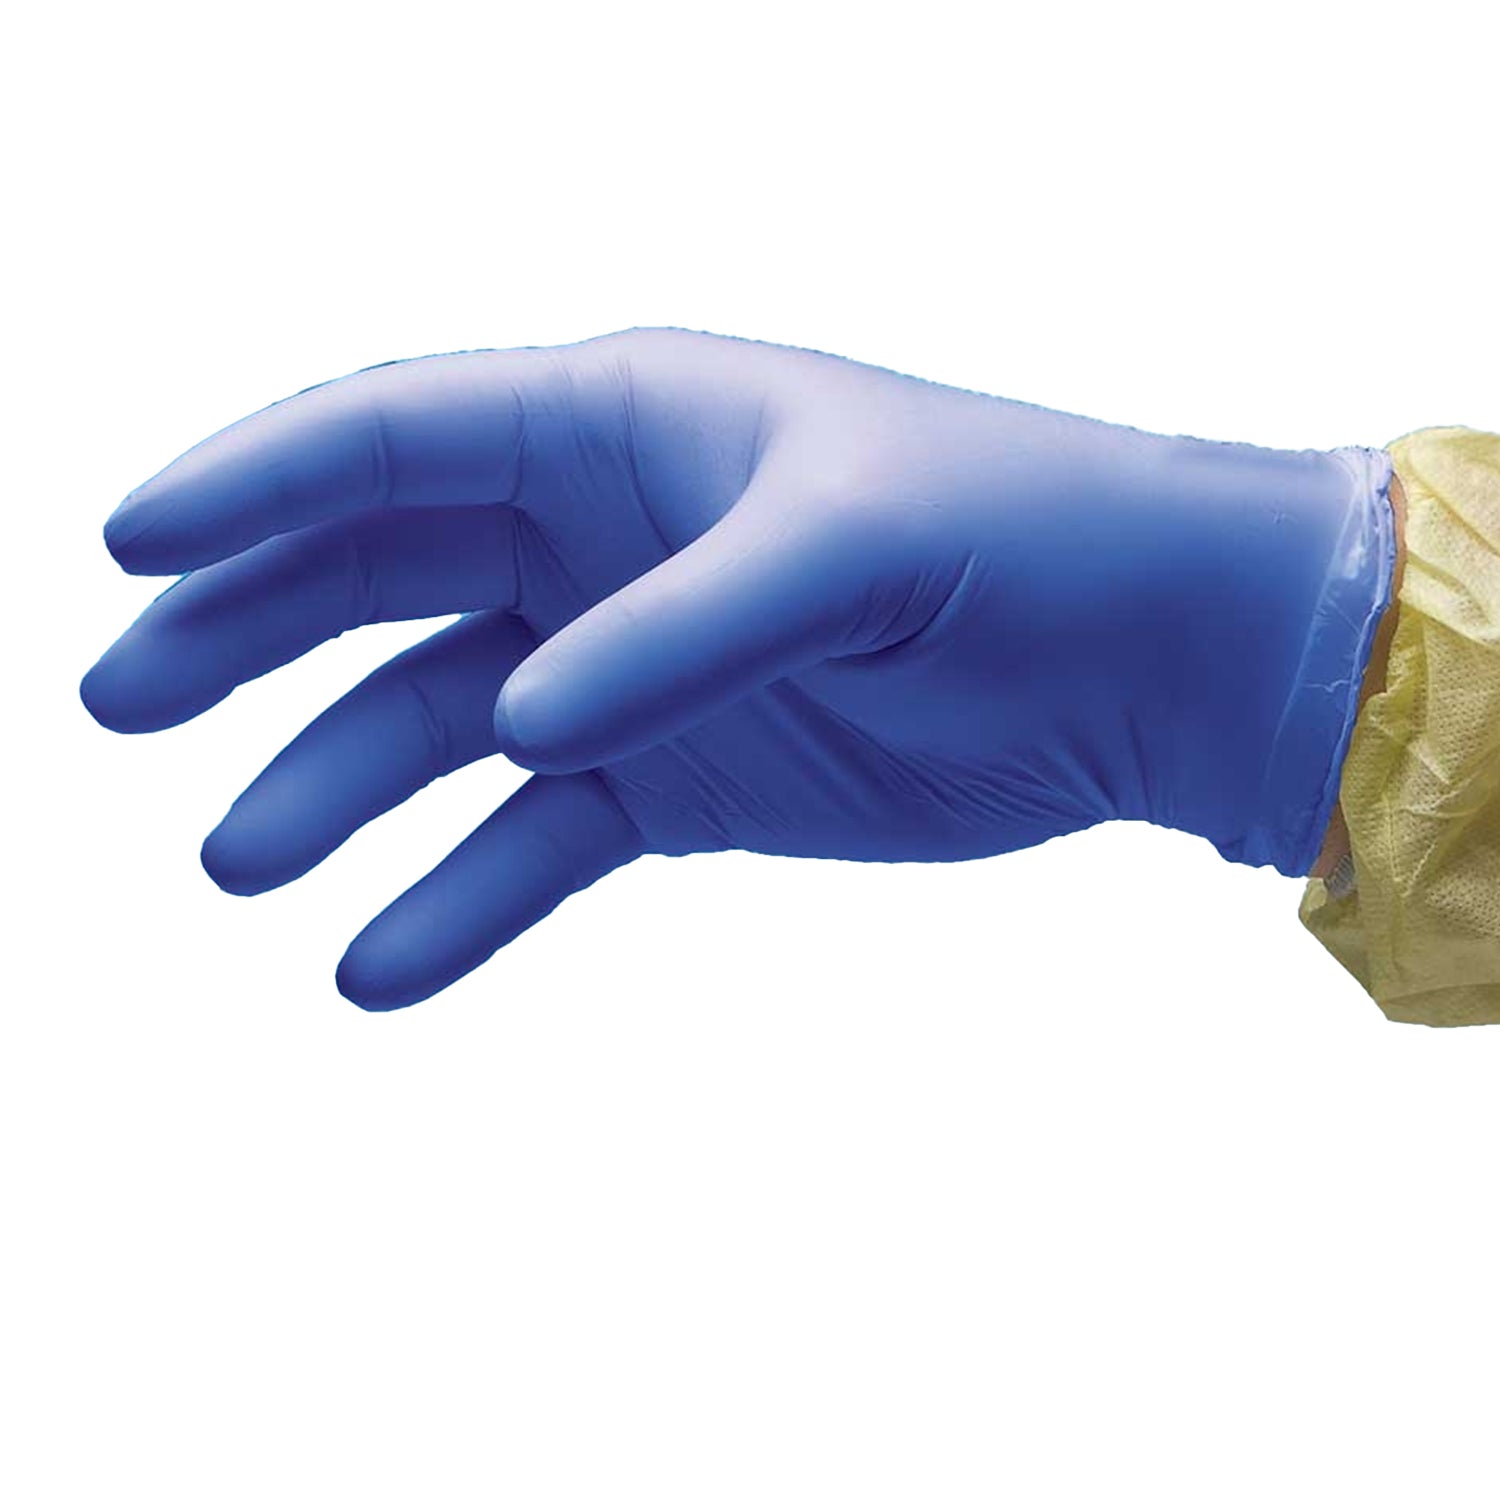 Premier AF Nitrile Examination Gloves | Sterile | Latex Free | Medium | Pack of 50 Pairs (1)